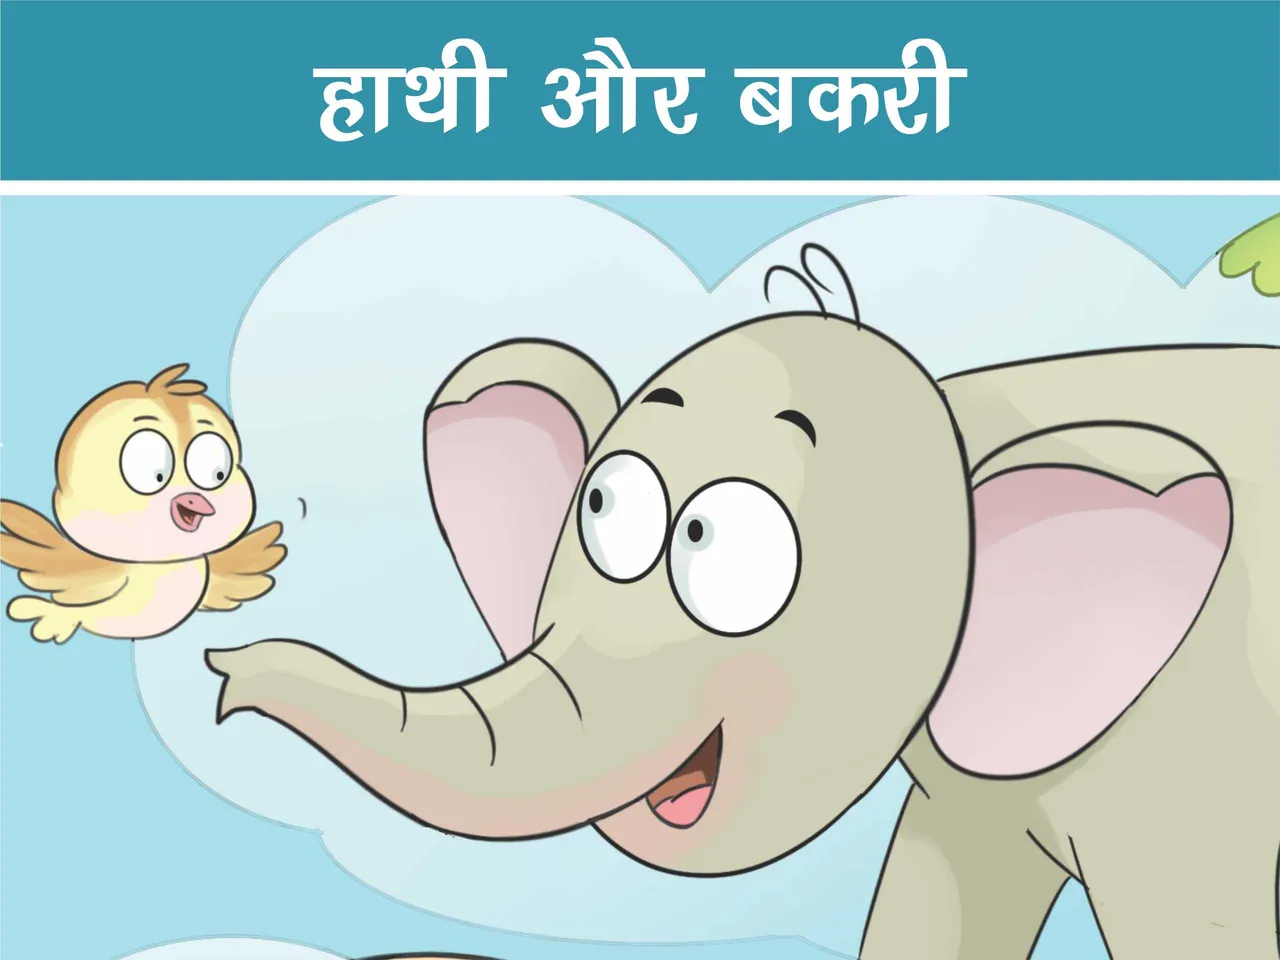 Cartoon image of an elephant and bird